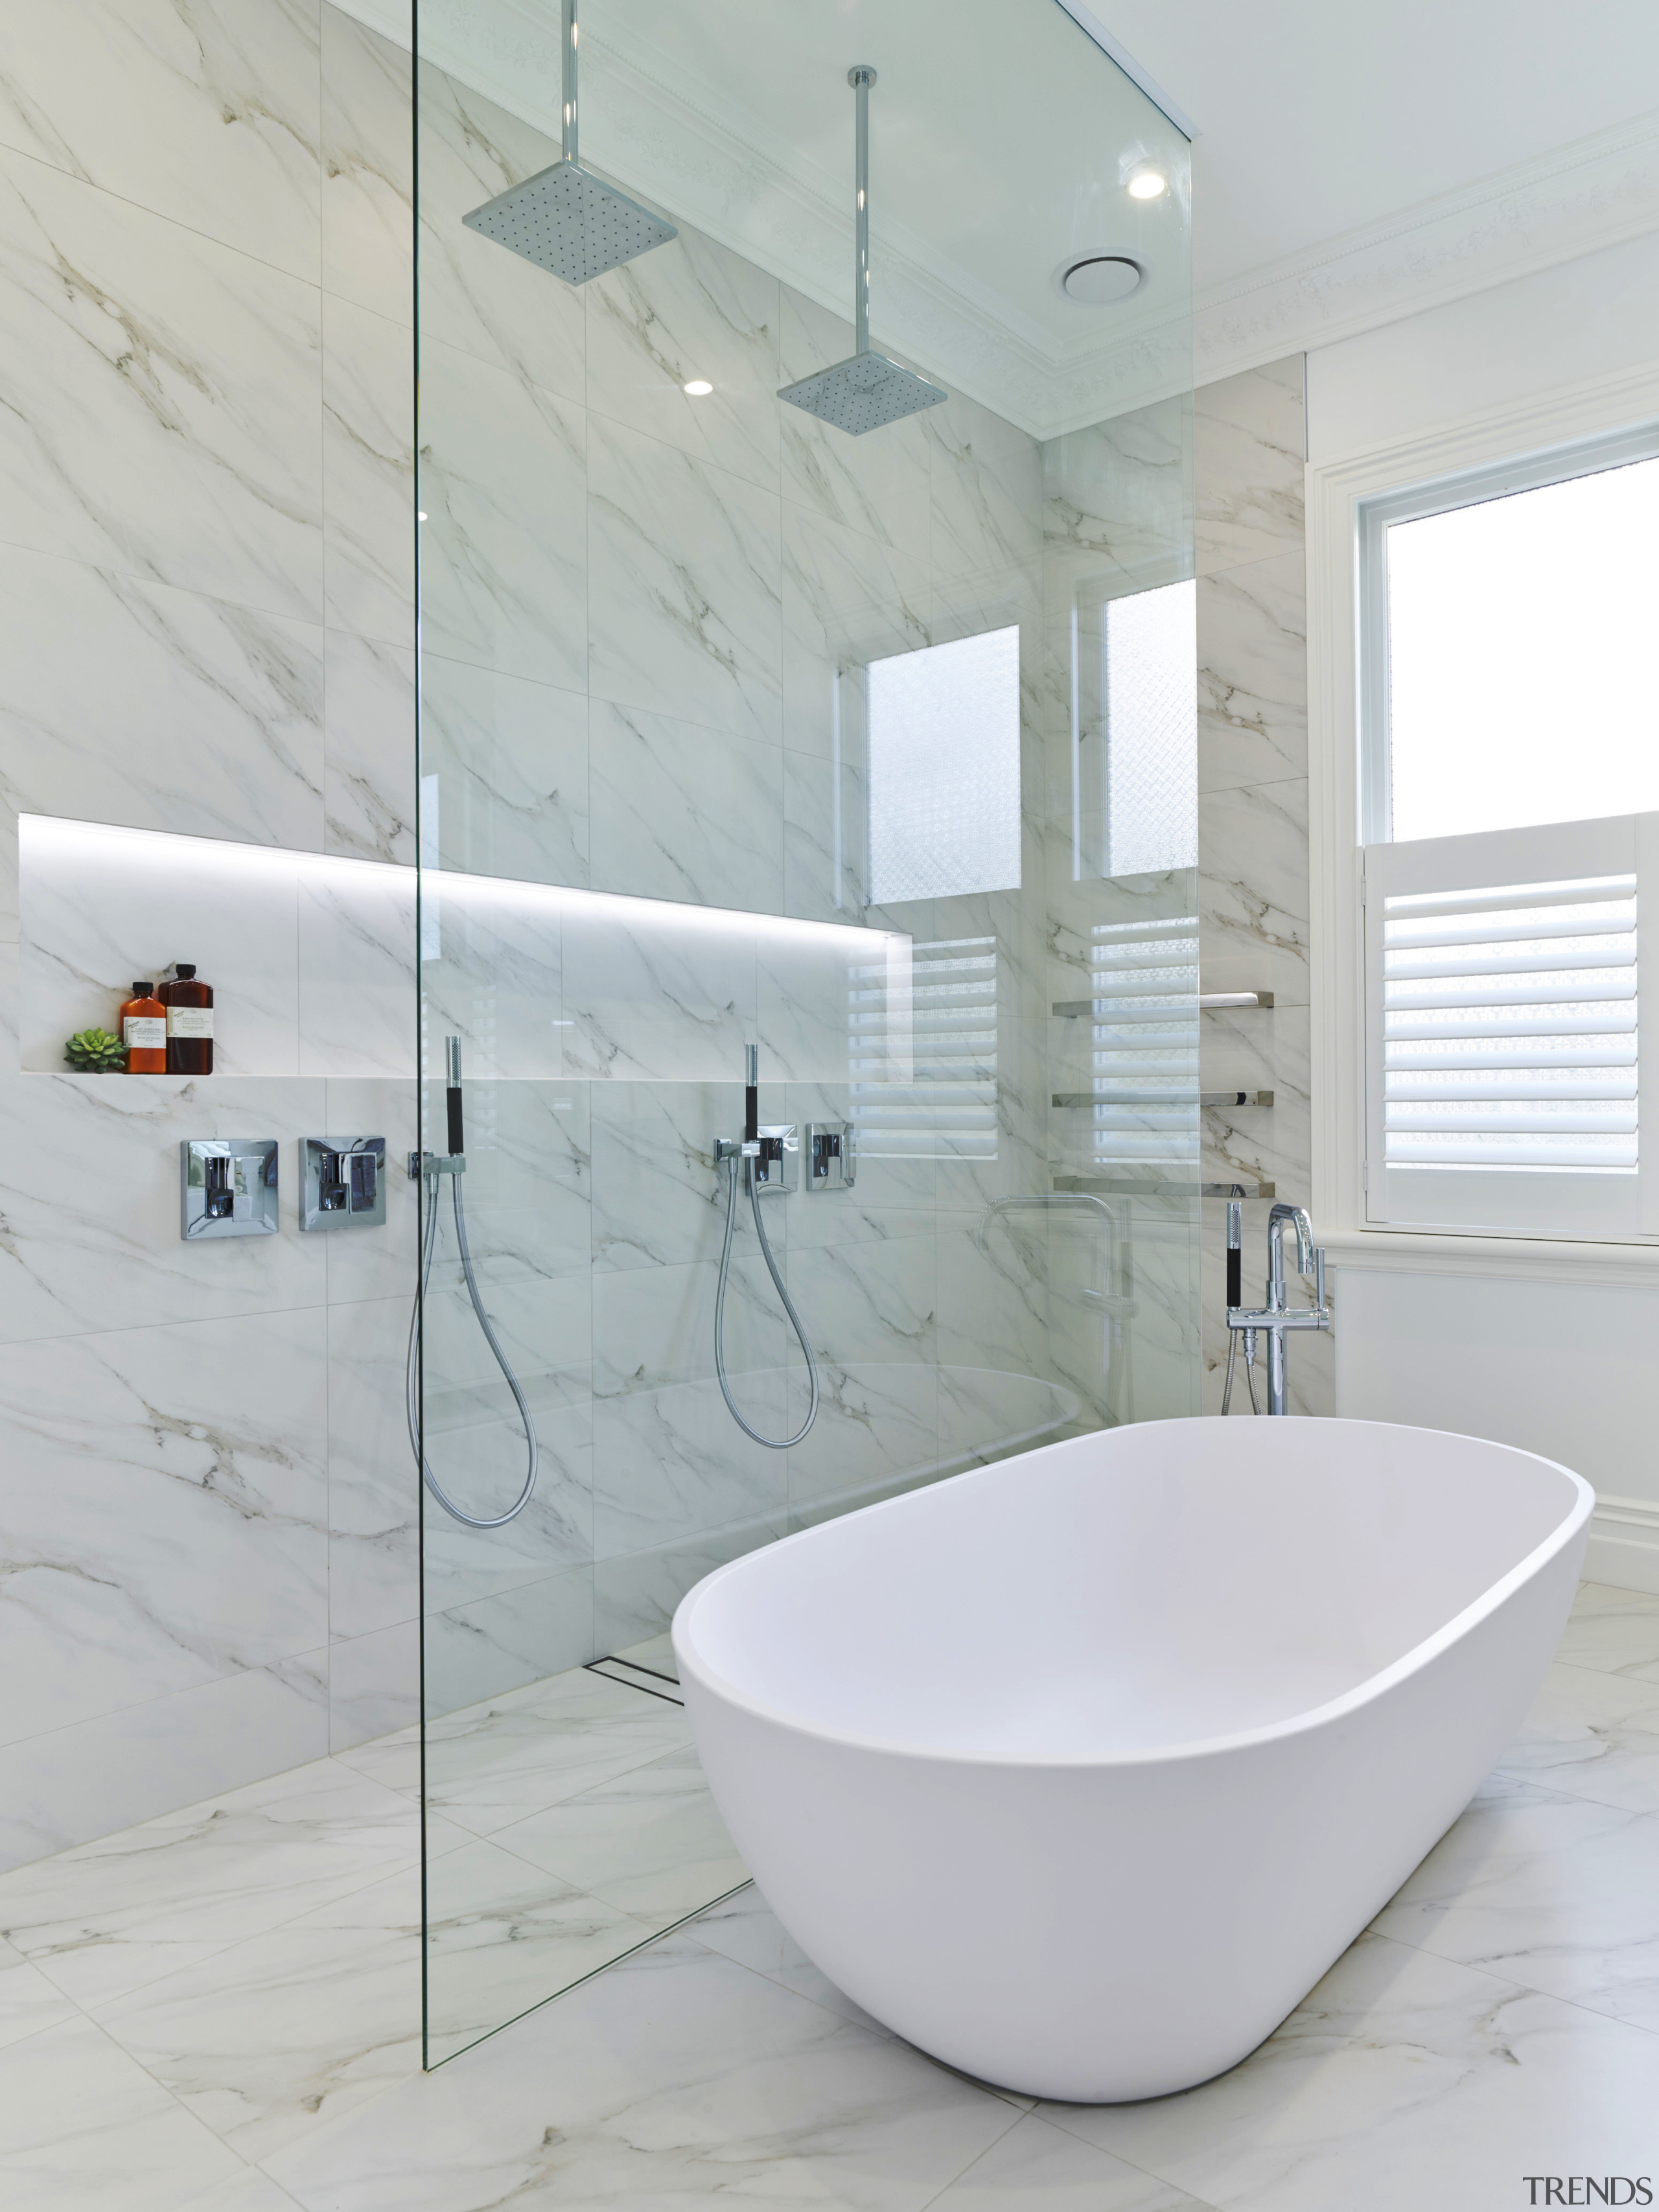 A floor-to-ceiling glass shower screen adds to the bathroom, bathroom sink, ceramic, floor, interior design, plumbing fixture, product design, tap, tile, gray